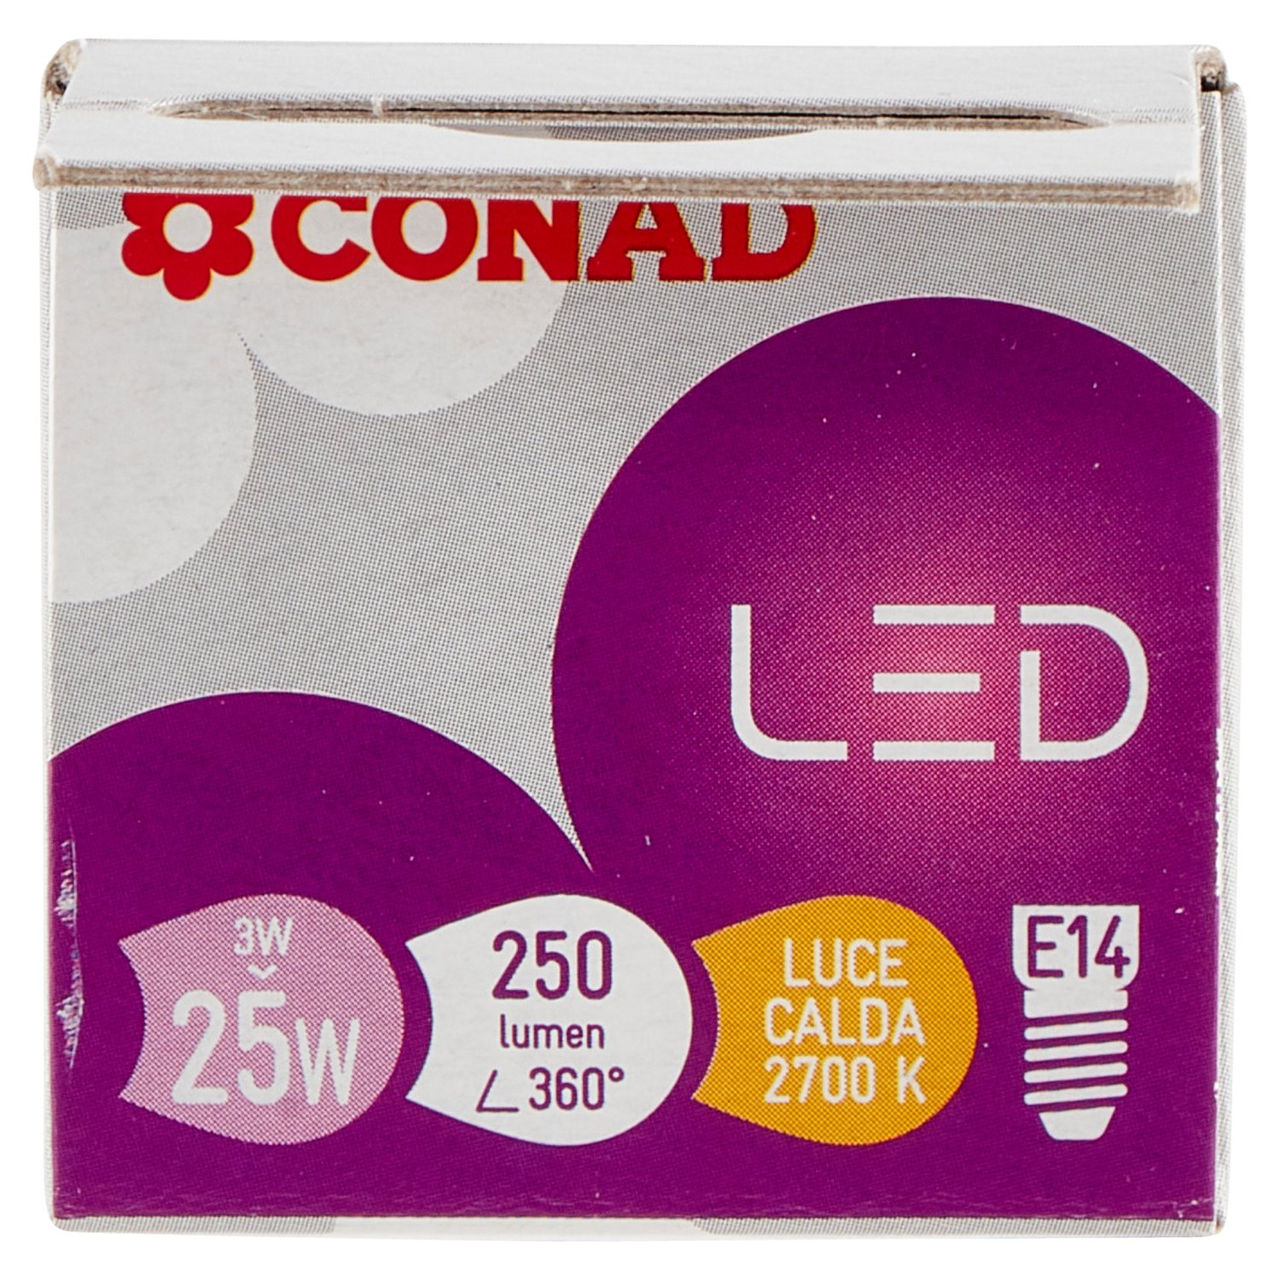 CONAD Led 3W 250 Lumen E14 Luce Calda